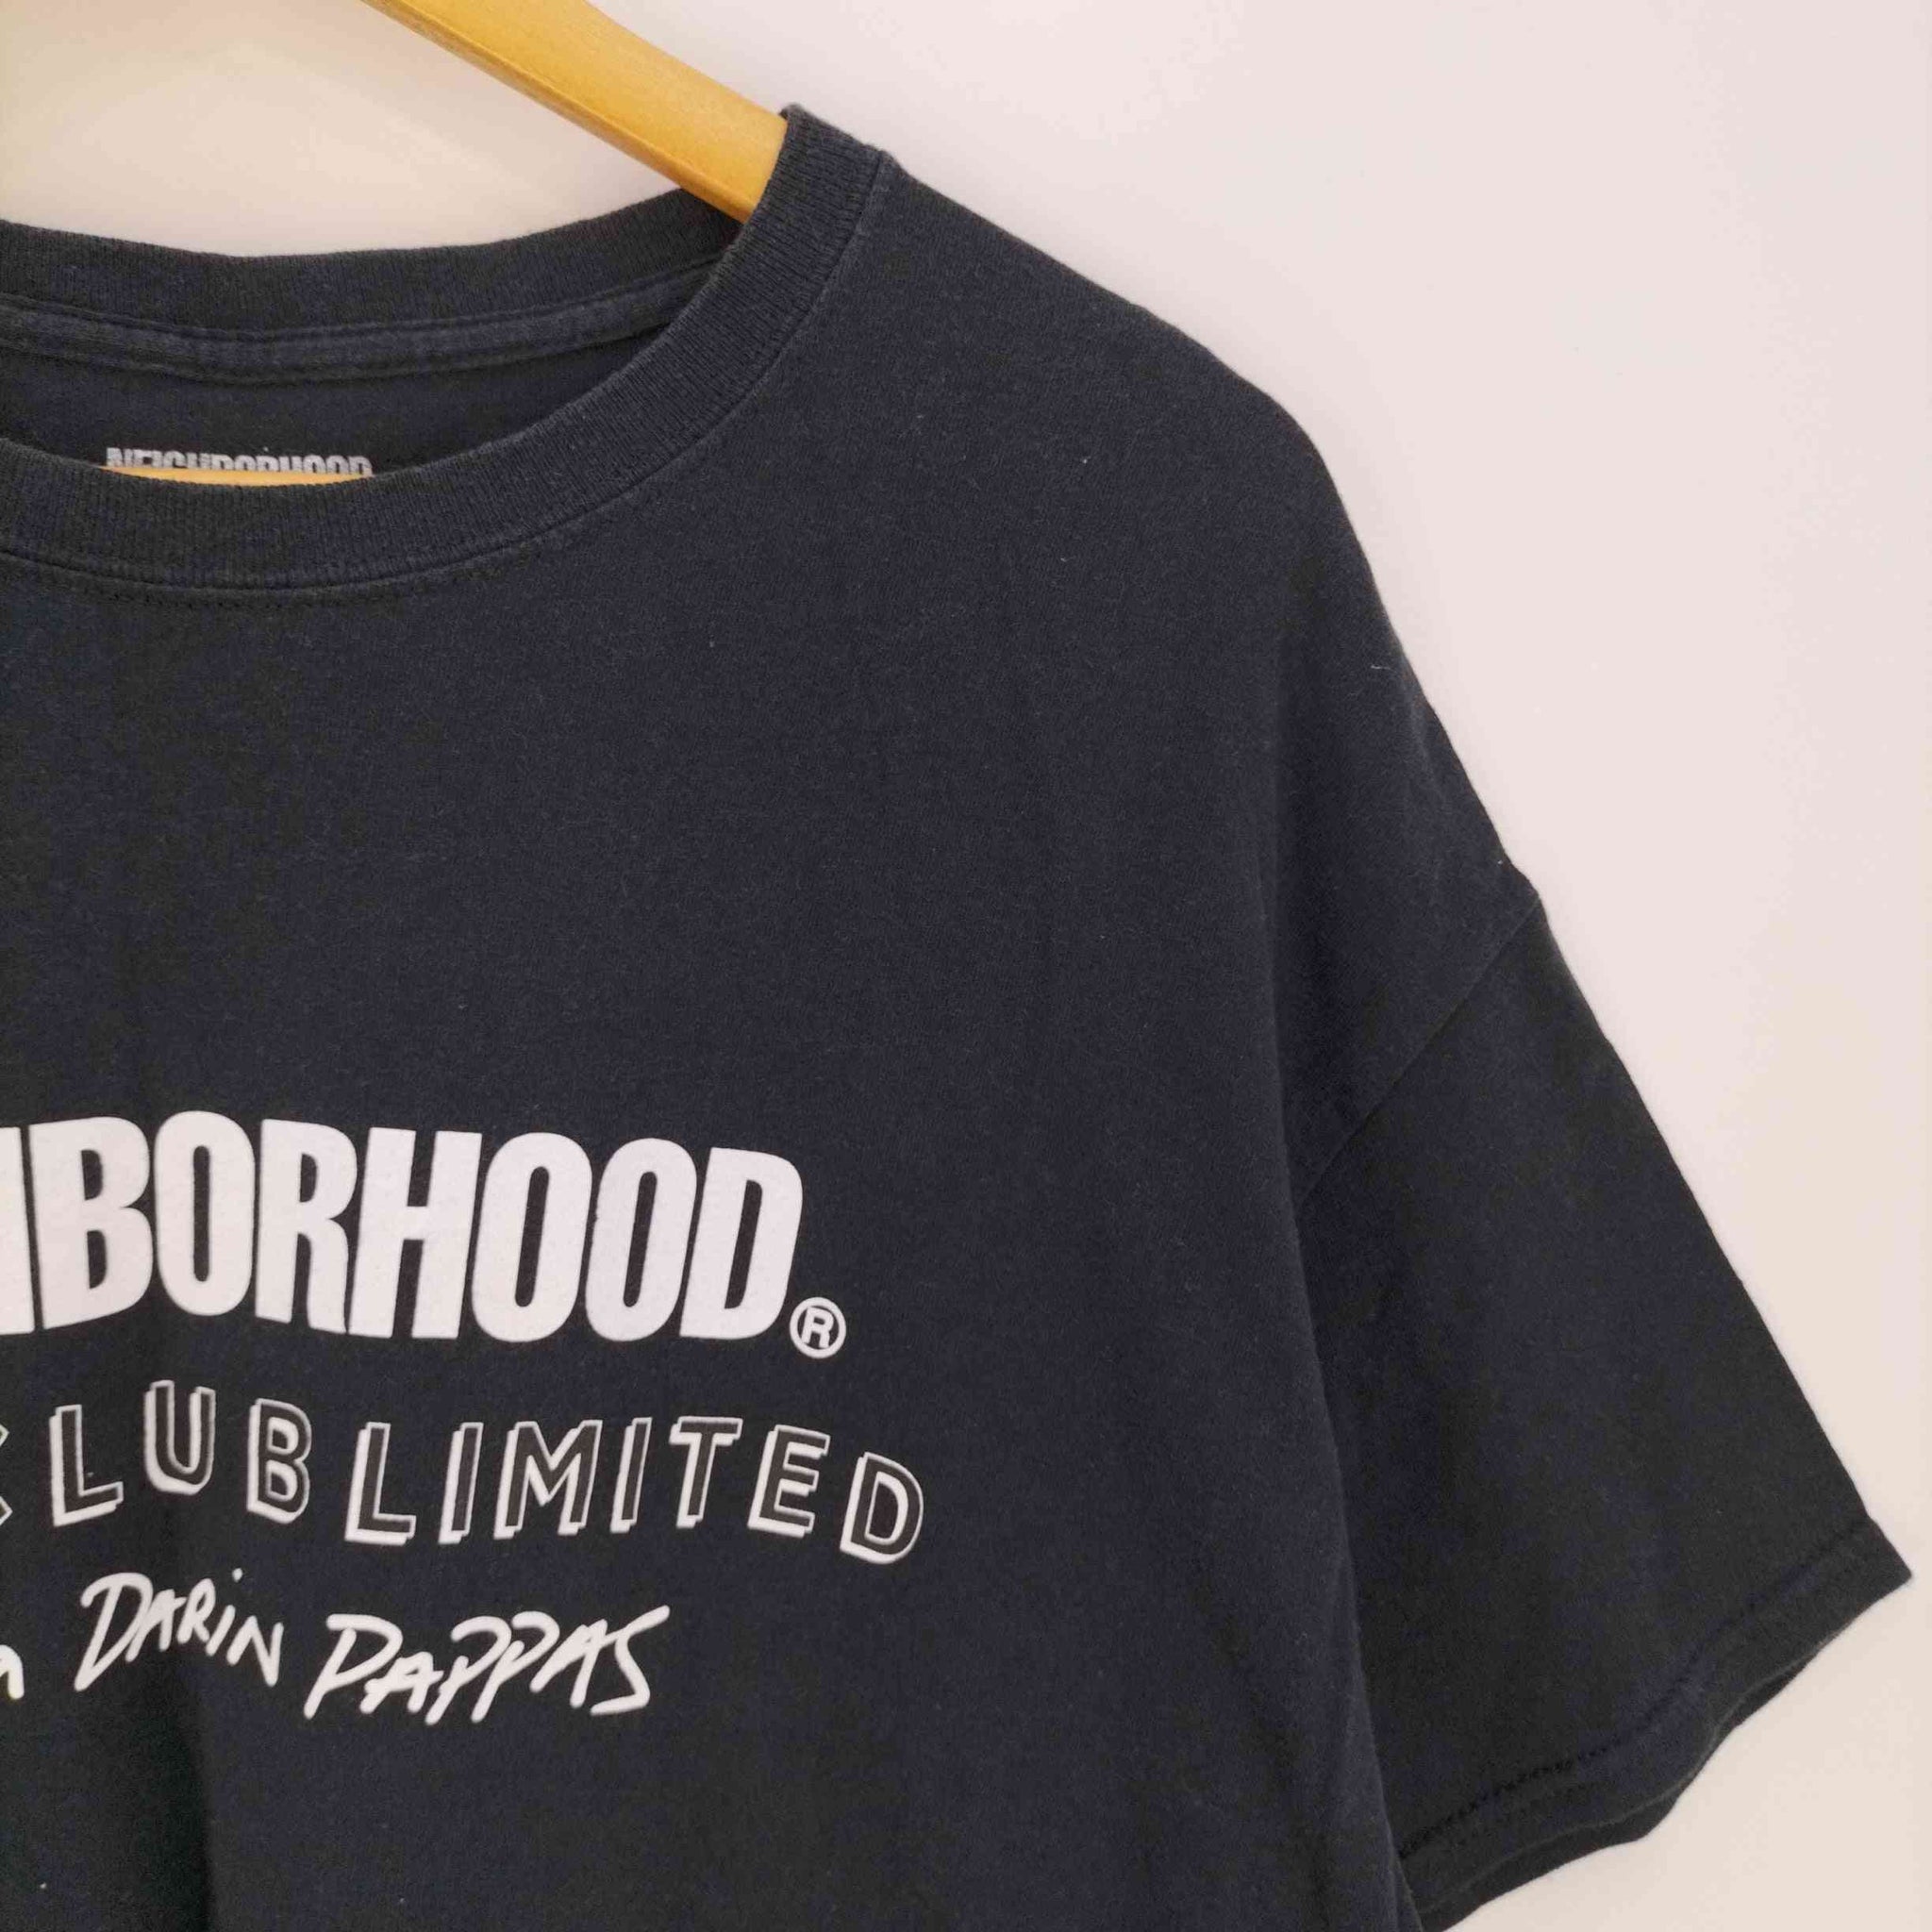 NEIGHBORHOOD(ネイバーフッド)Image Club Limited NHIX-4 Tシャツ